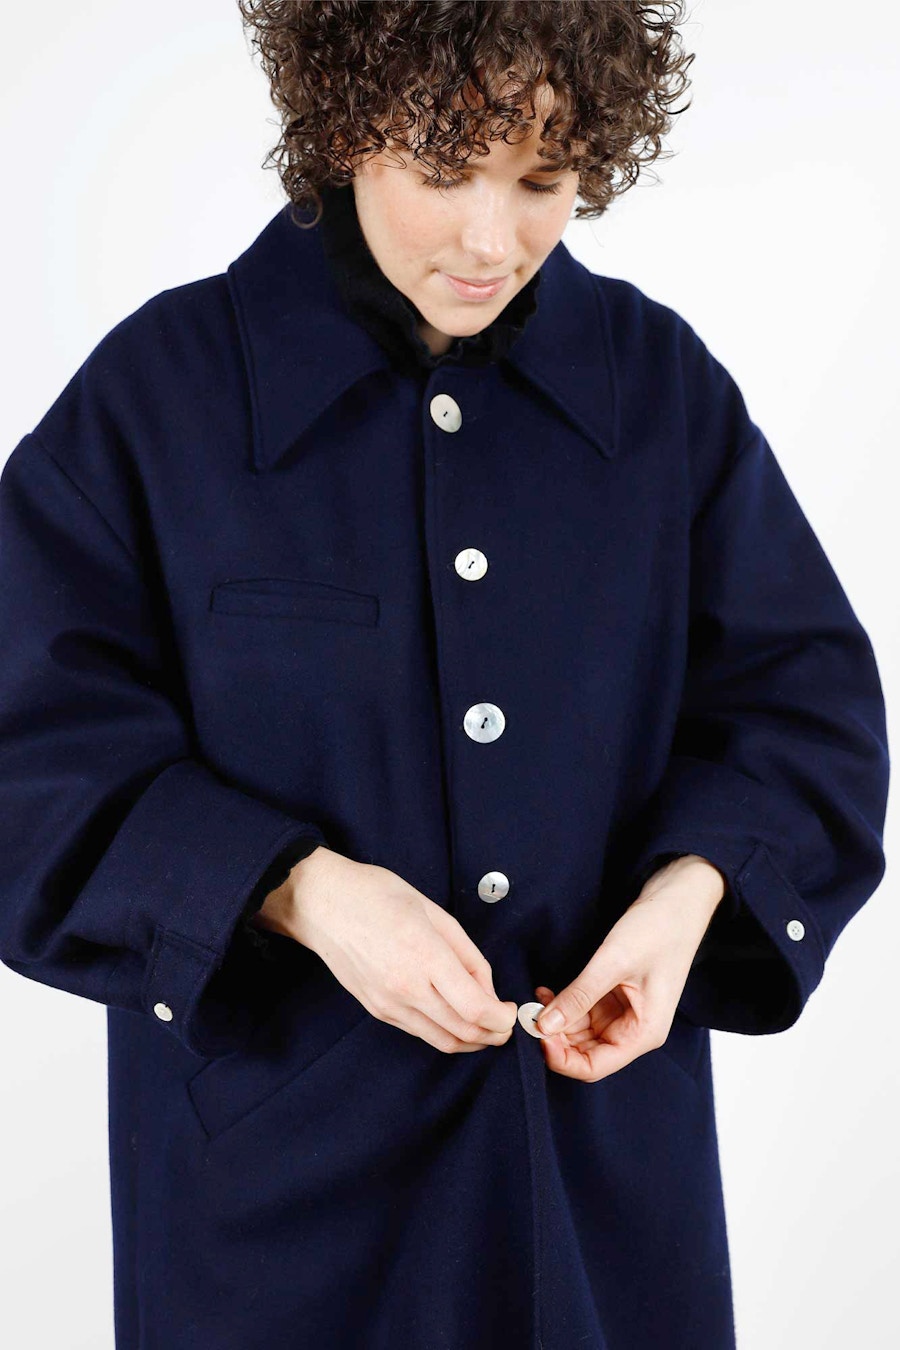 Crop Amy Darcy Coat Buttoning